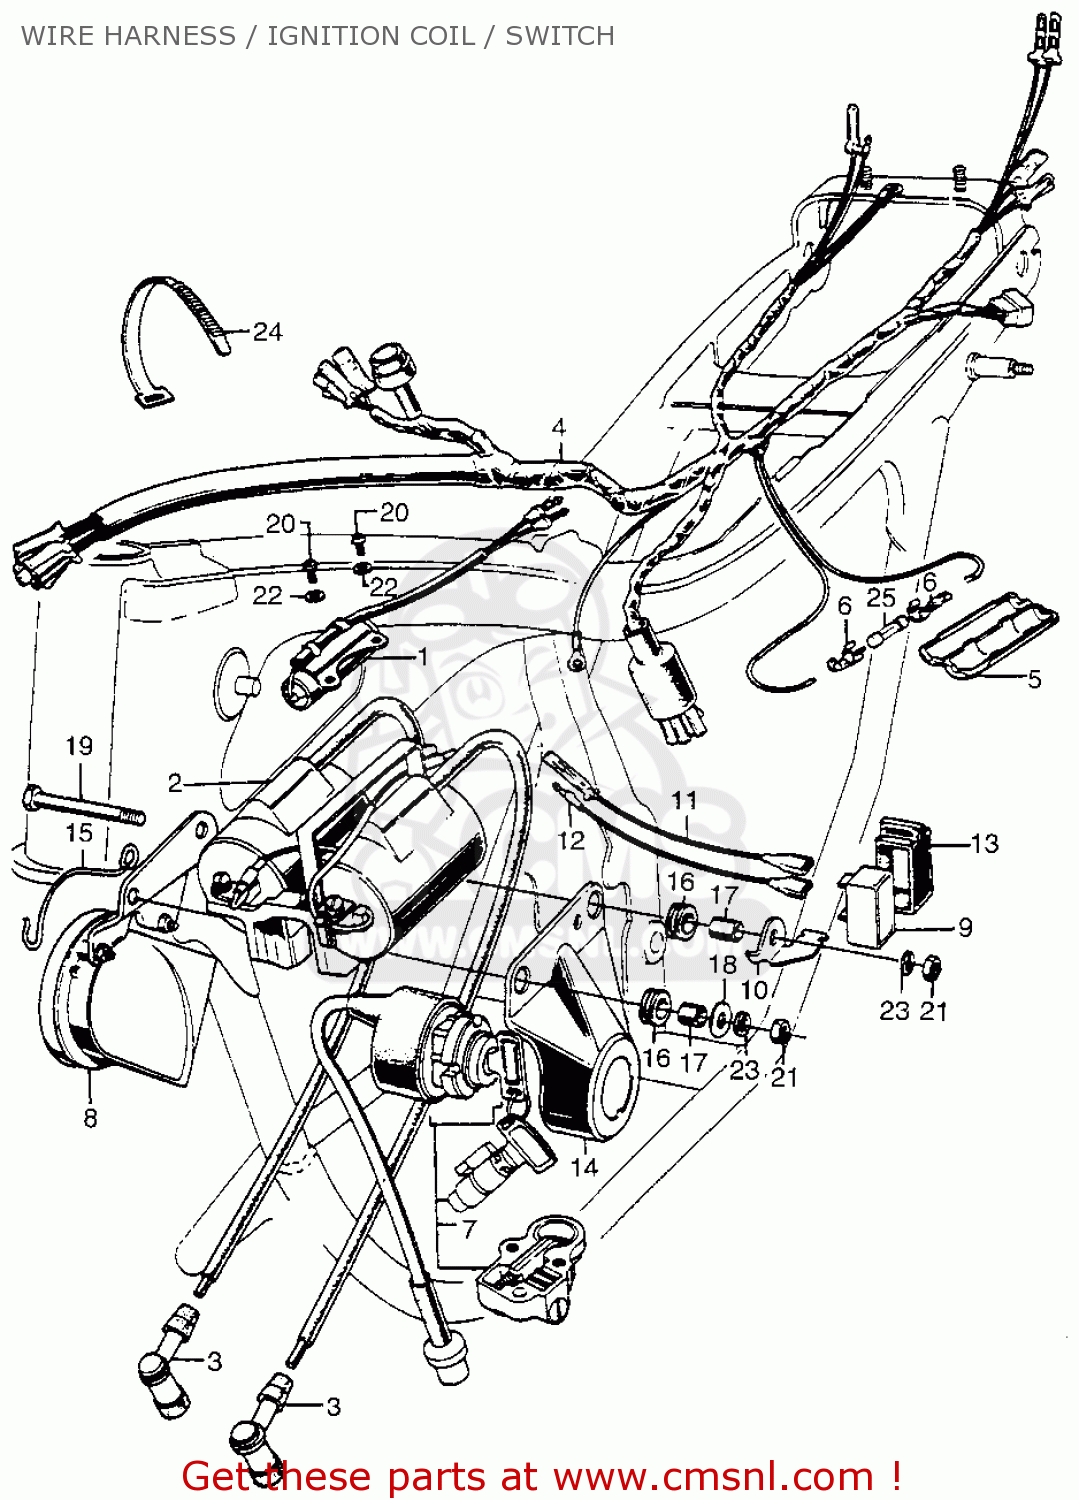 1972 Honda Cb450 Parts Diagram | hobbiesxstyle 1973 honda cb350 wiring harness 